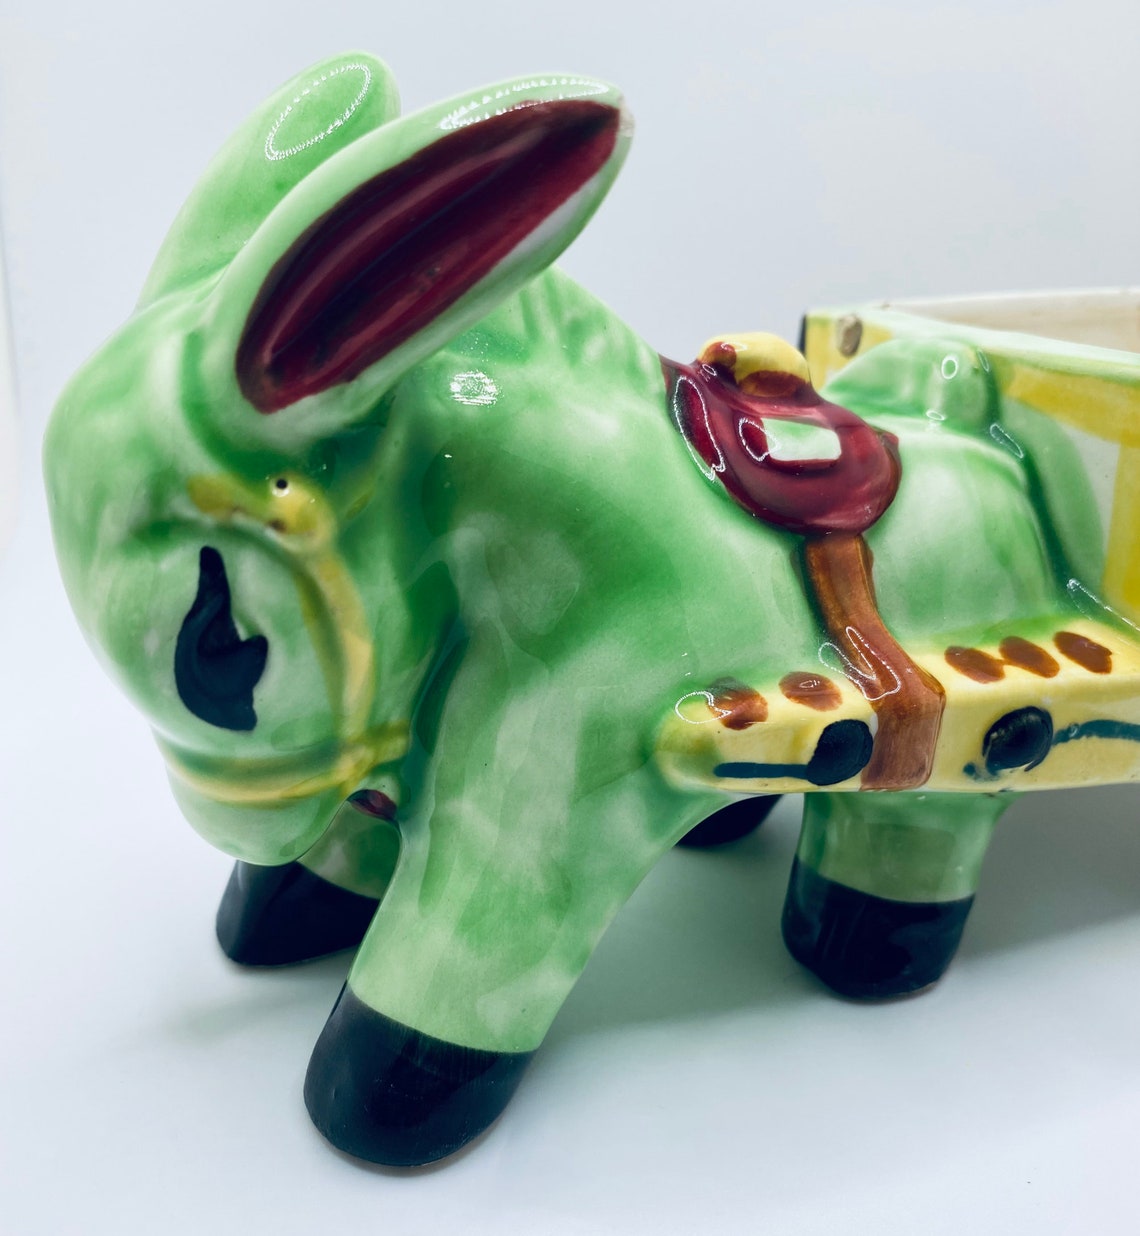 Vintage Japan Ceramic Donkey and Cart Planter - Etsy